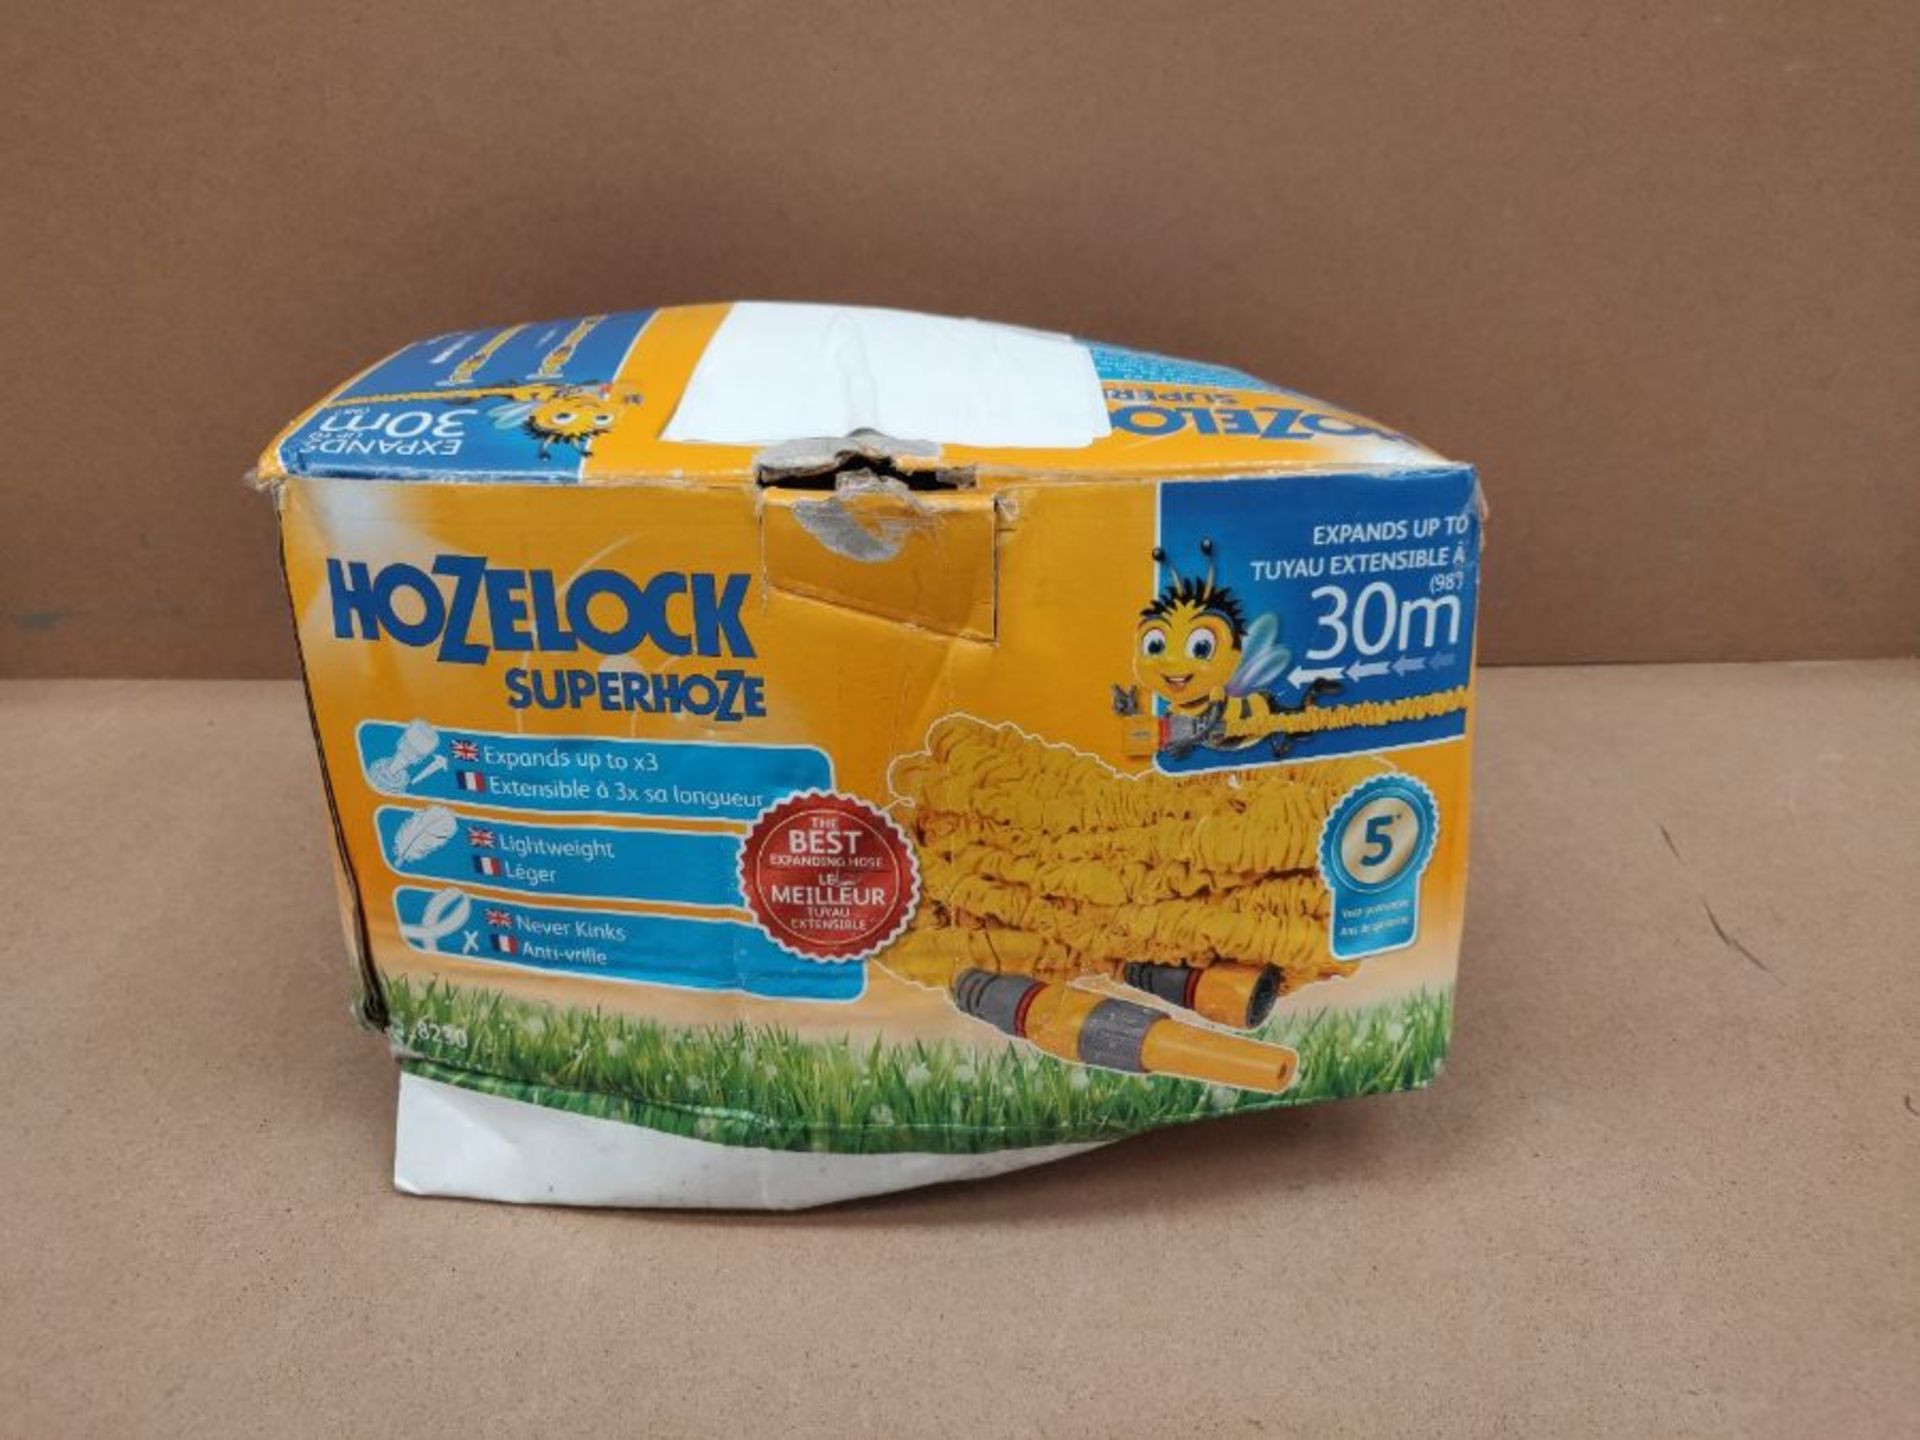 Hozelock 8230 8000 30m Superhoze Hosepipe, Yellow & Grey - Image 2 of 3